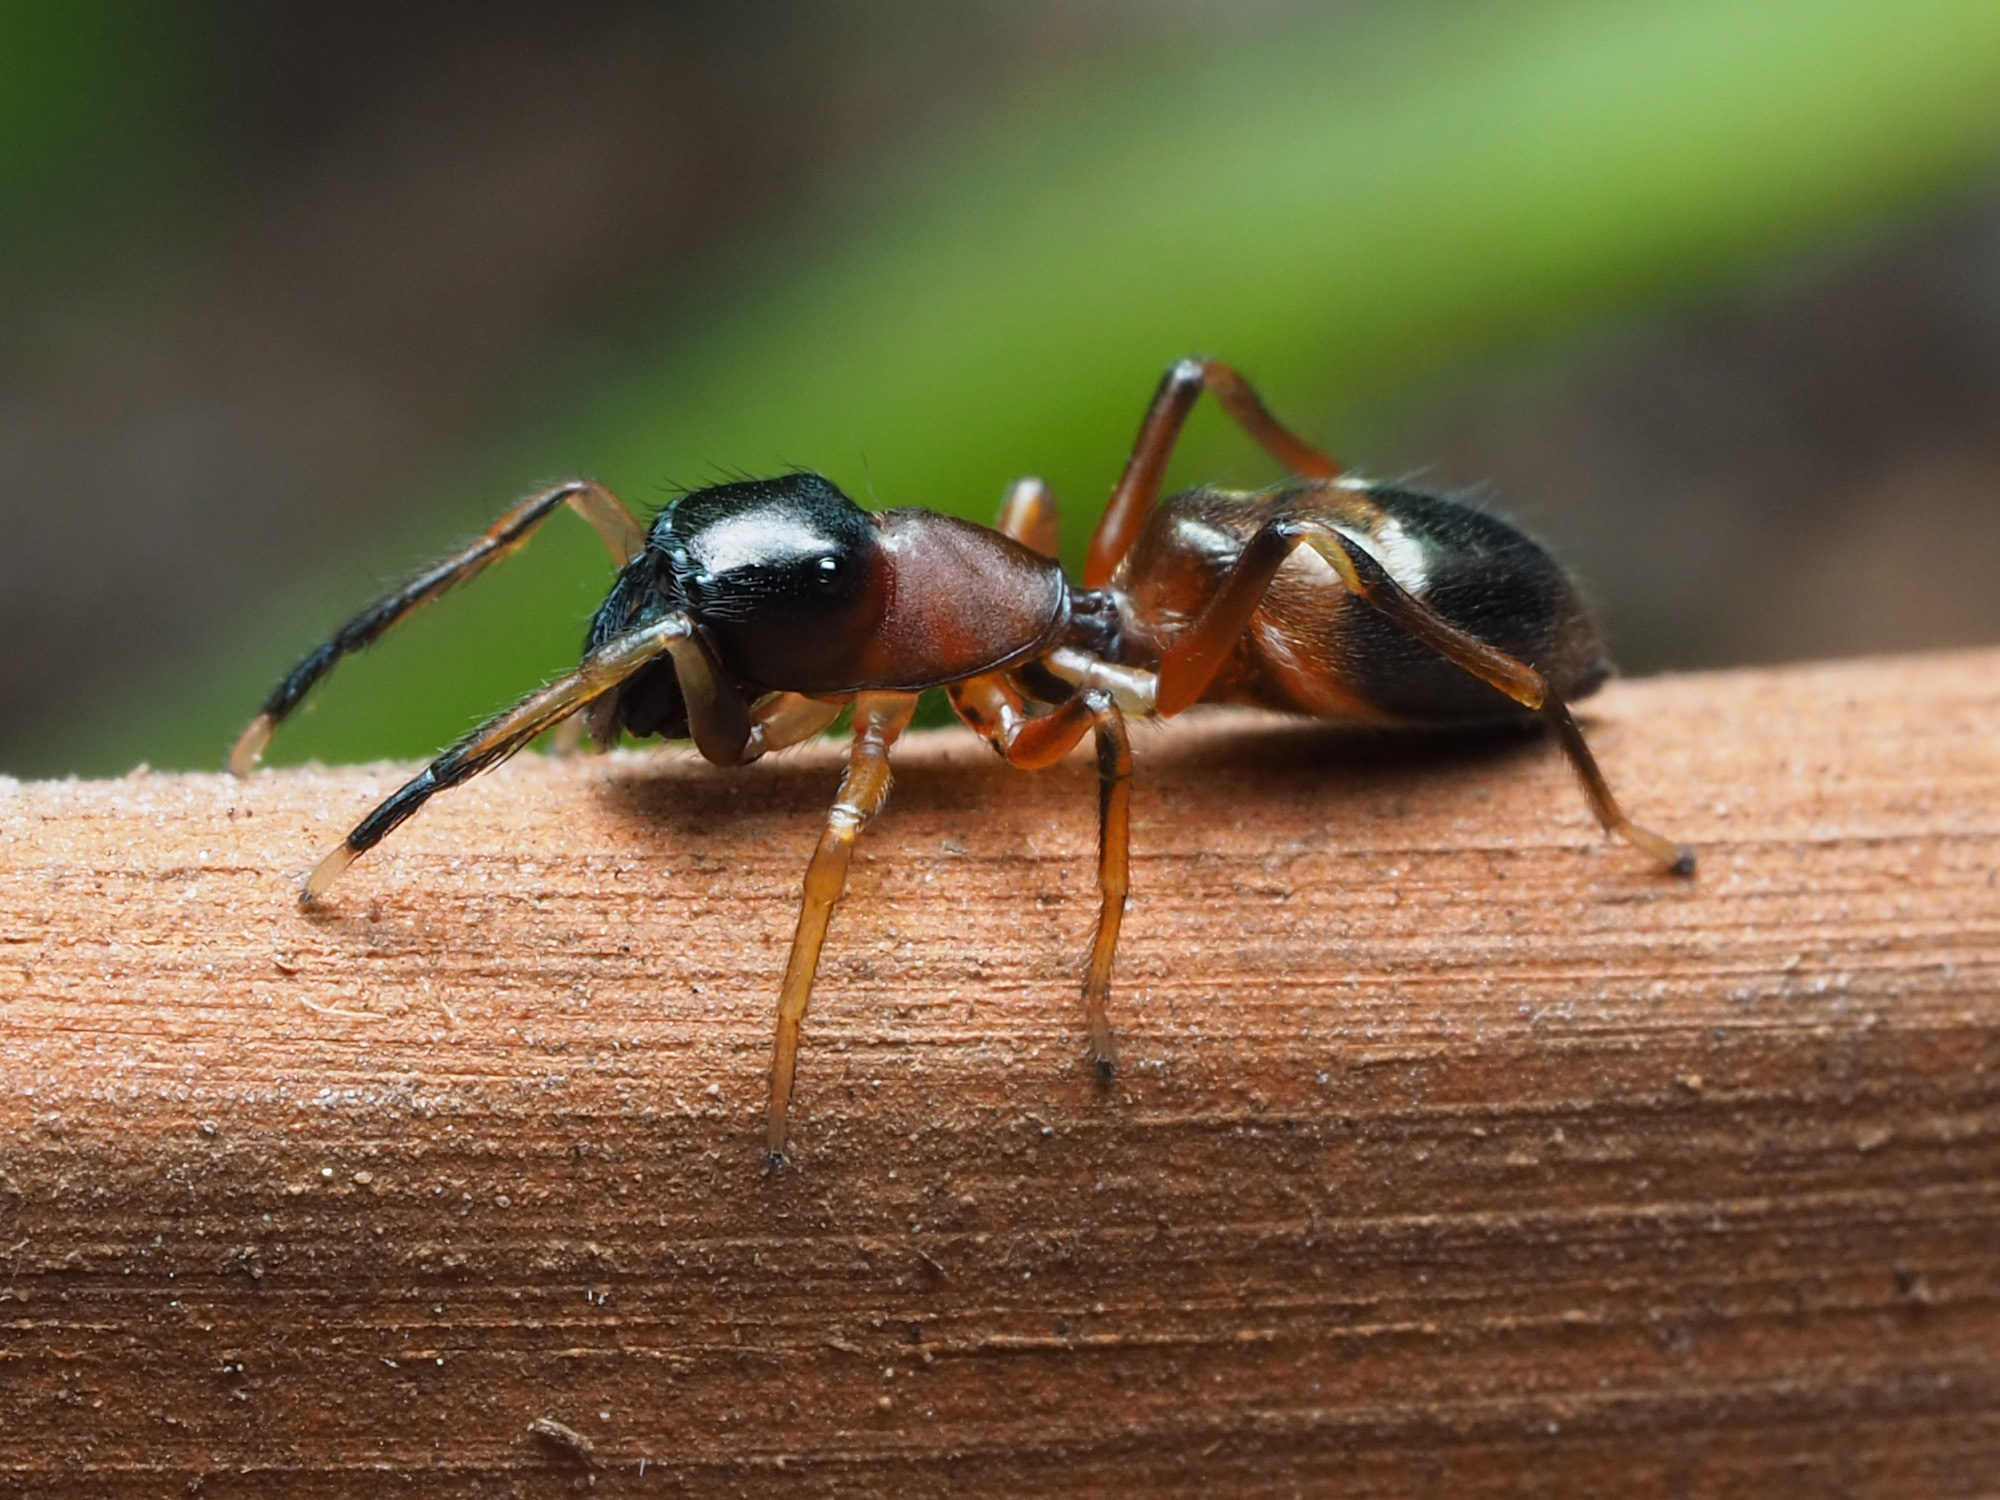 a female ant-mimicking spider Myrmarachne formicaria